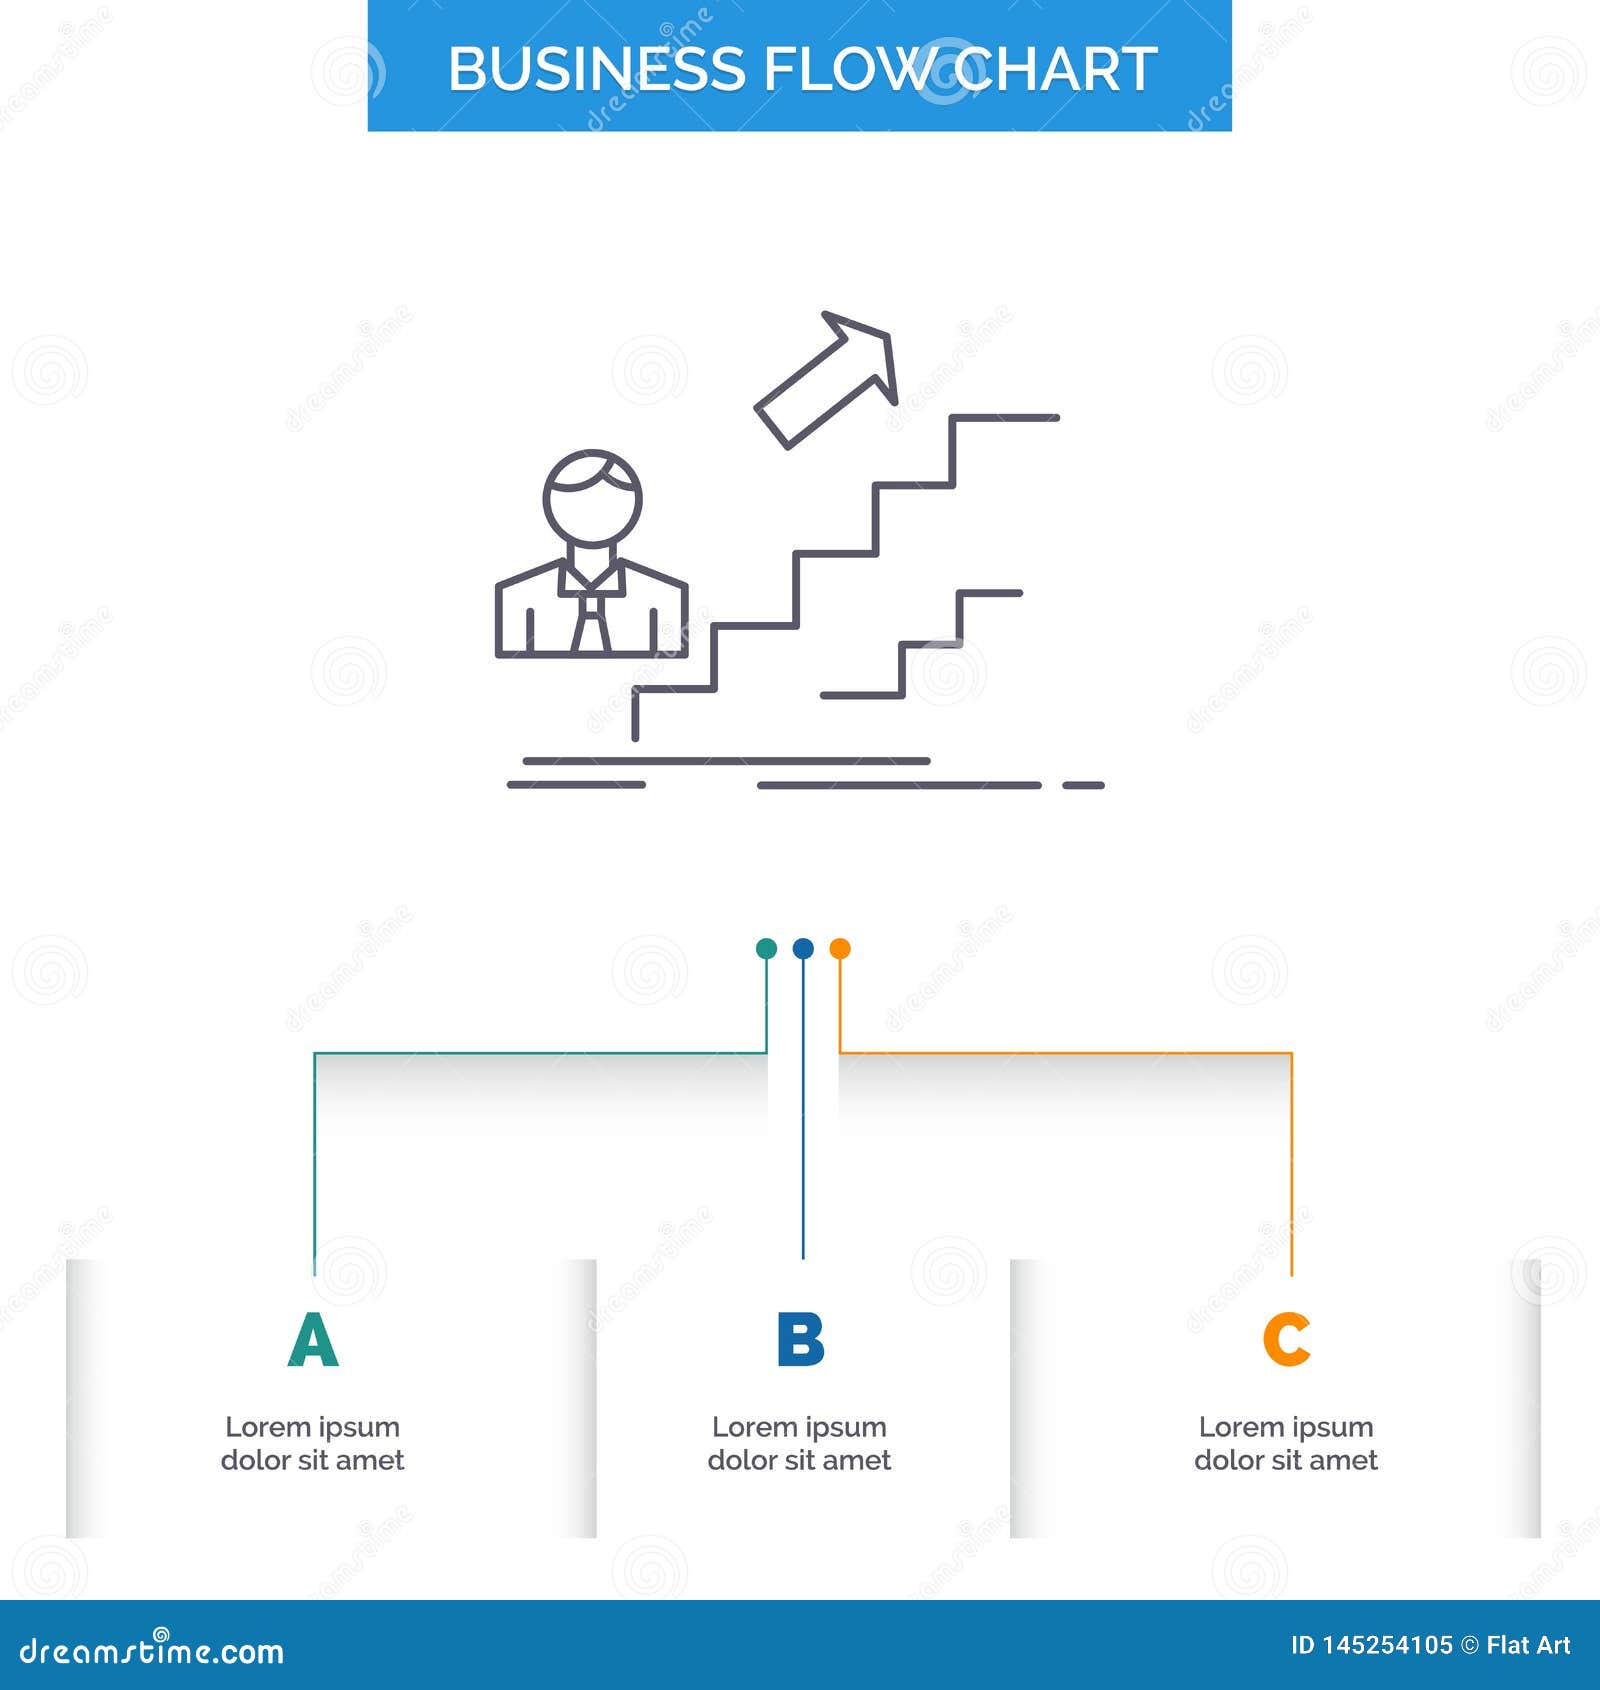 Career Flow Chart